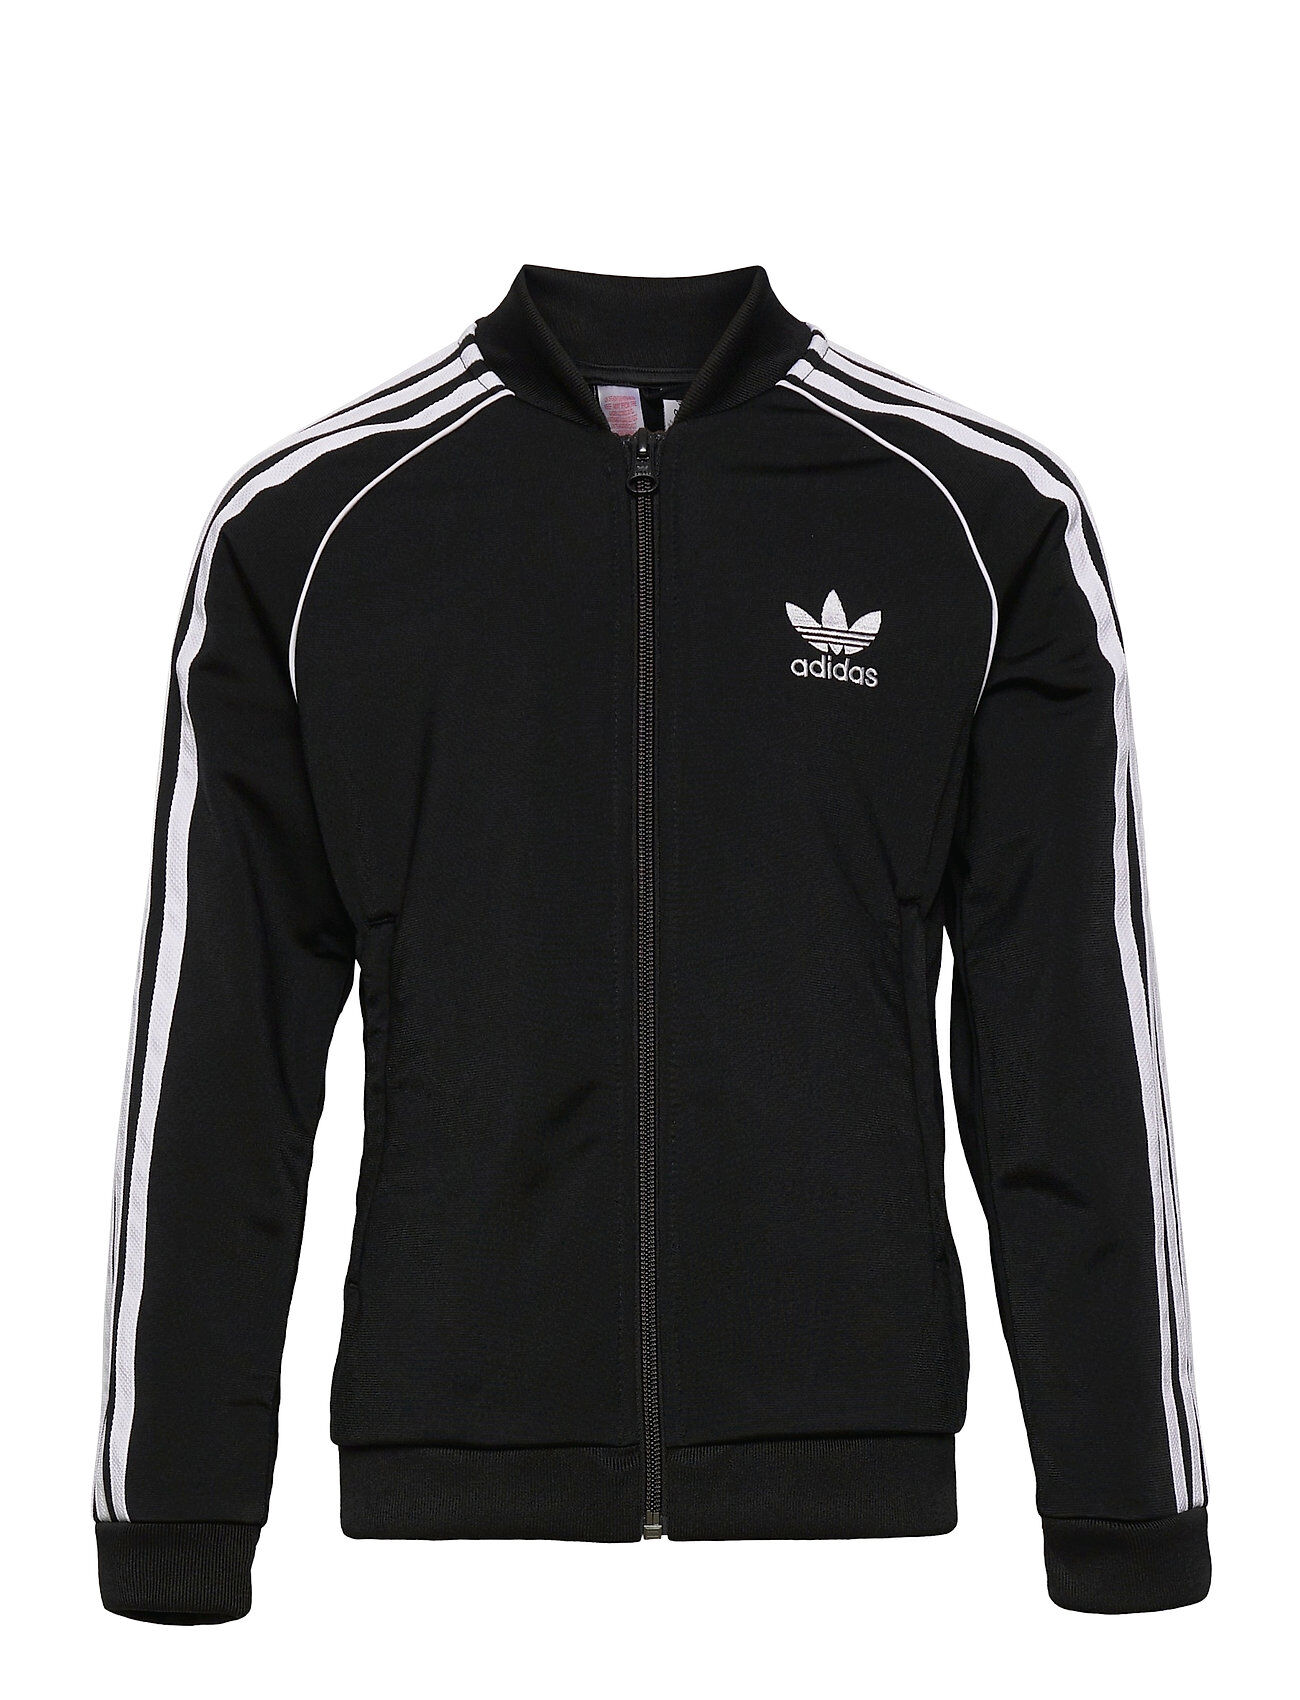 adidas Originals Adicolor Superstar Sst Track Jacket Sweat-shirt Genser Svart Adidas Originals